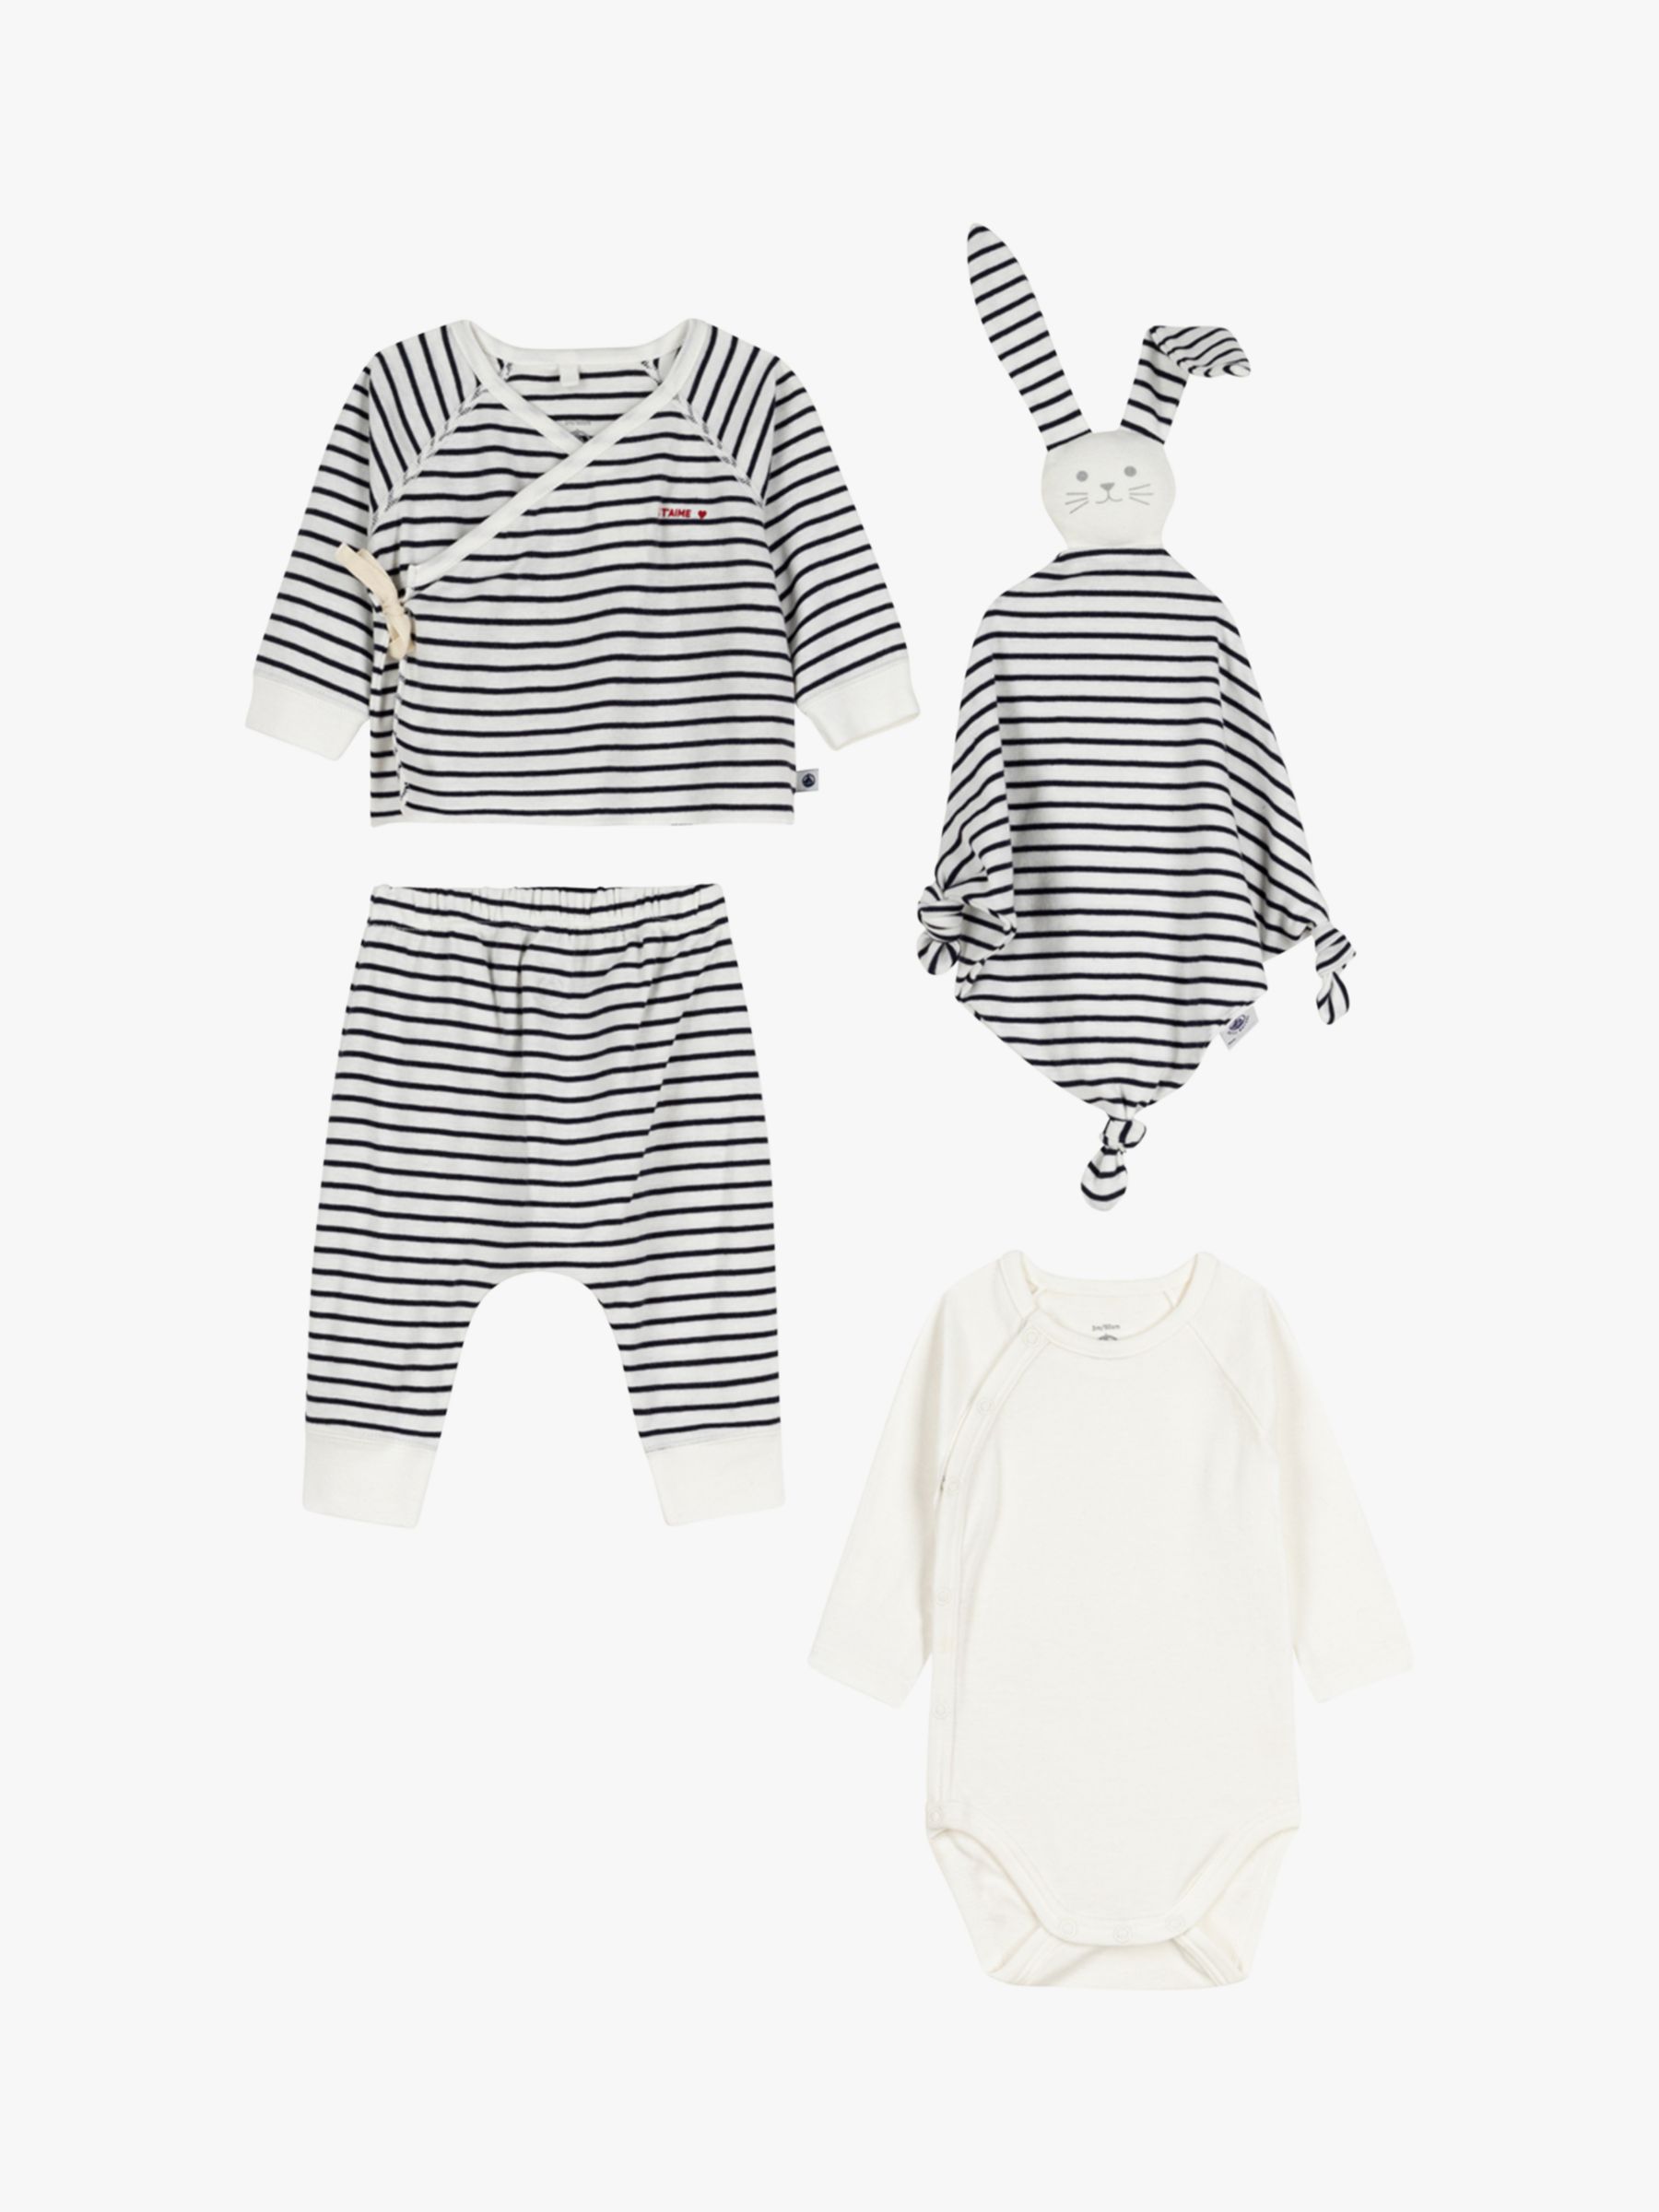 Petit Bateau Baby Breton Stripe 3 Piece Outfit & Comforter Gift Set, Smoke, 12 months